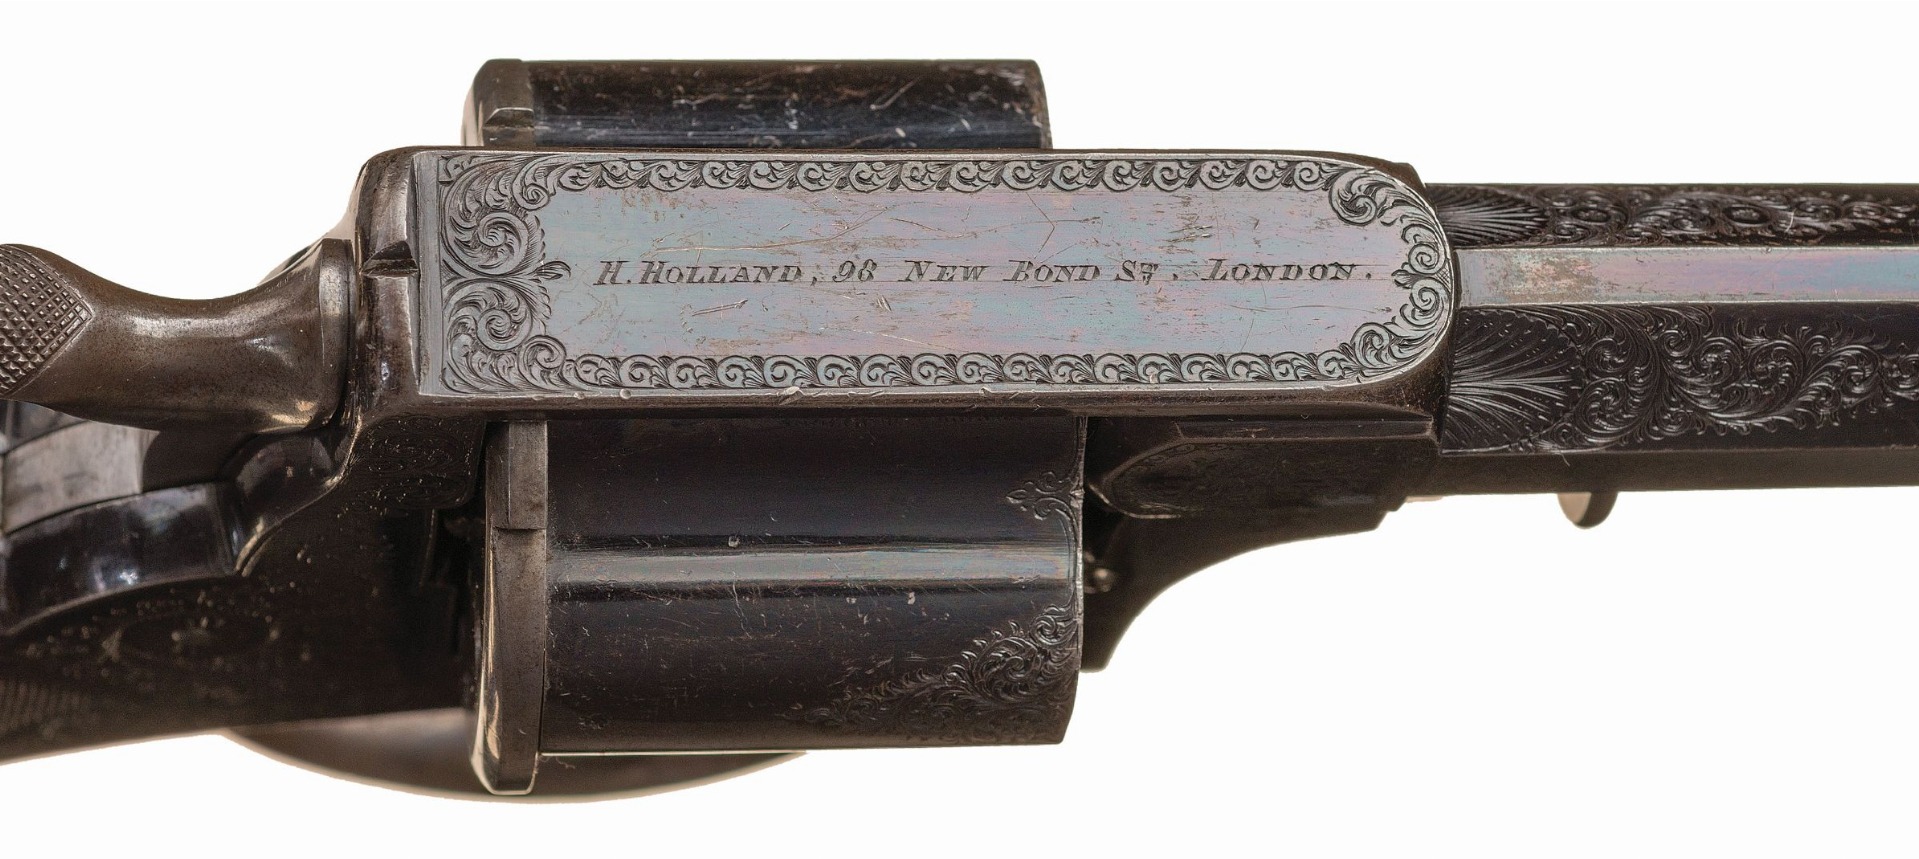 Tranter Manstopper revolver